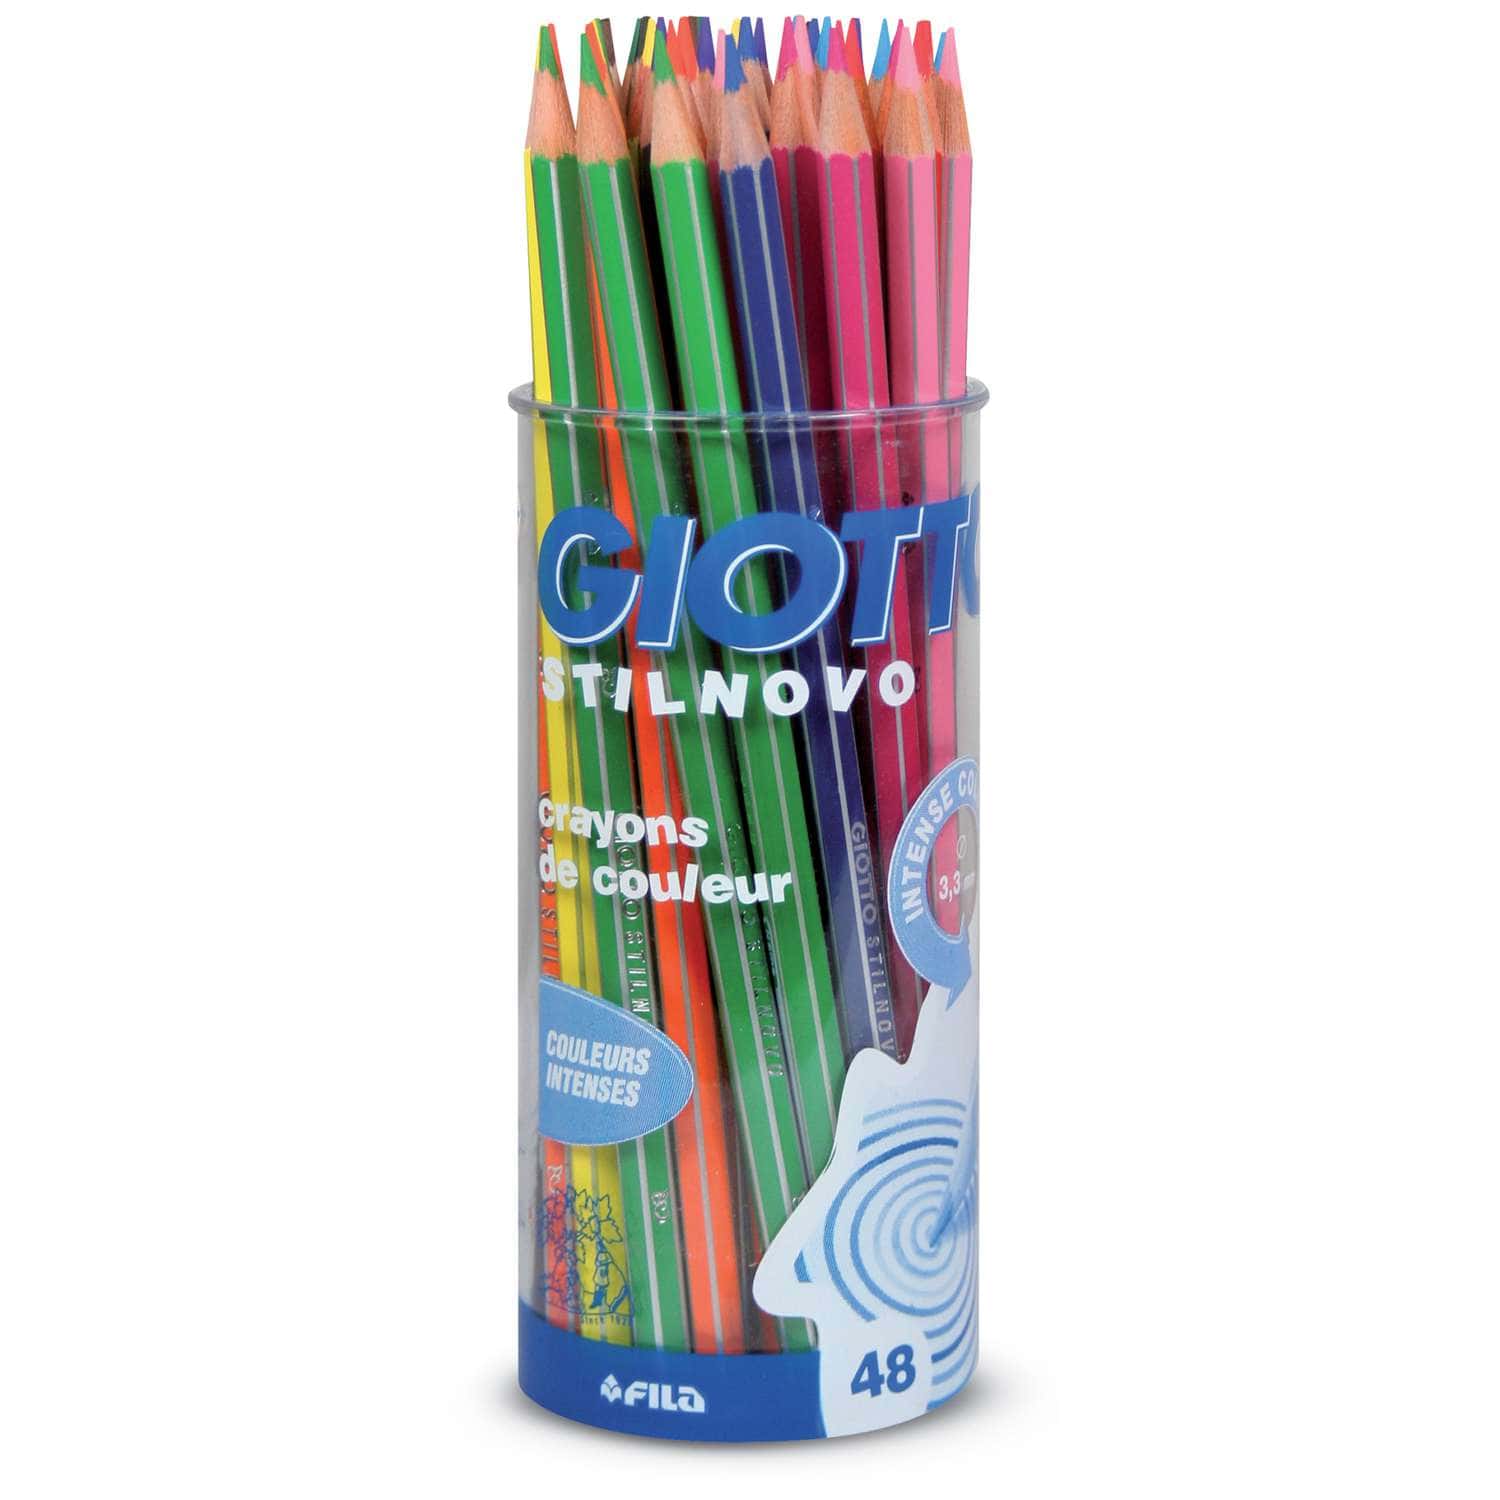 Giotto Stilnovo Coloured Pencil Sets, 50,000+ Art Supplies